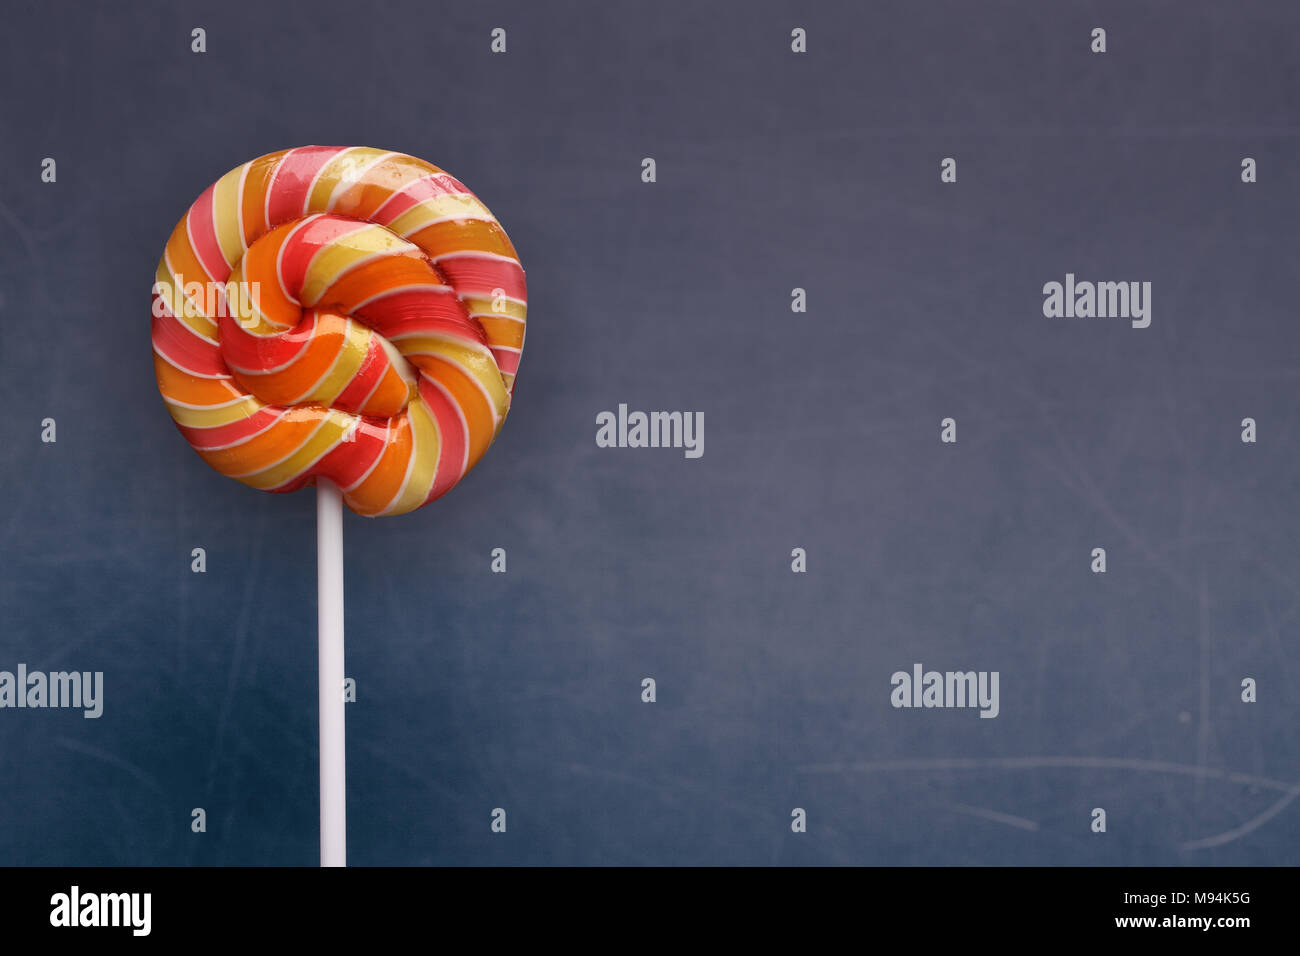 Birthday background with candy lollipop Stock Photo - Alamy